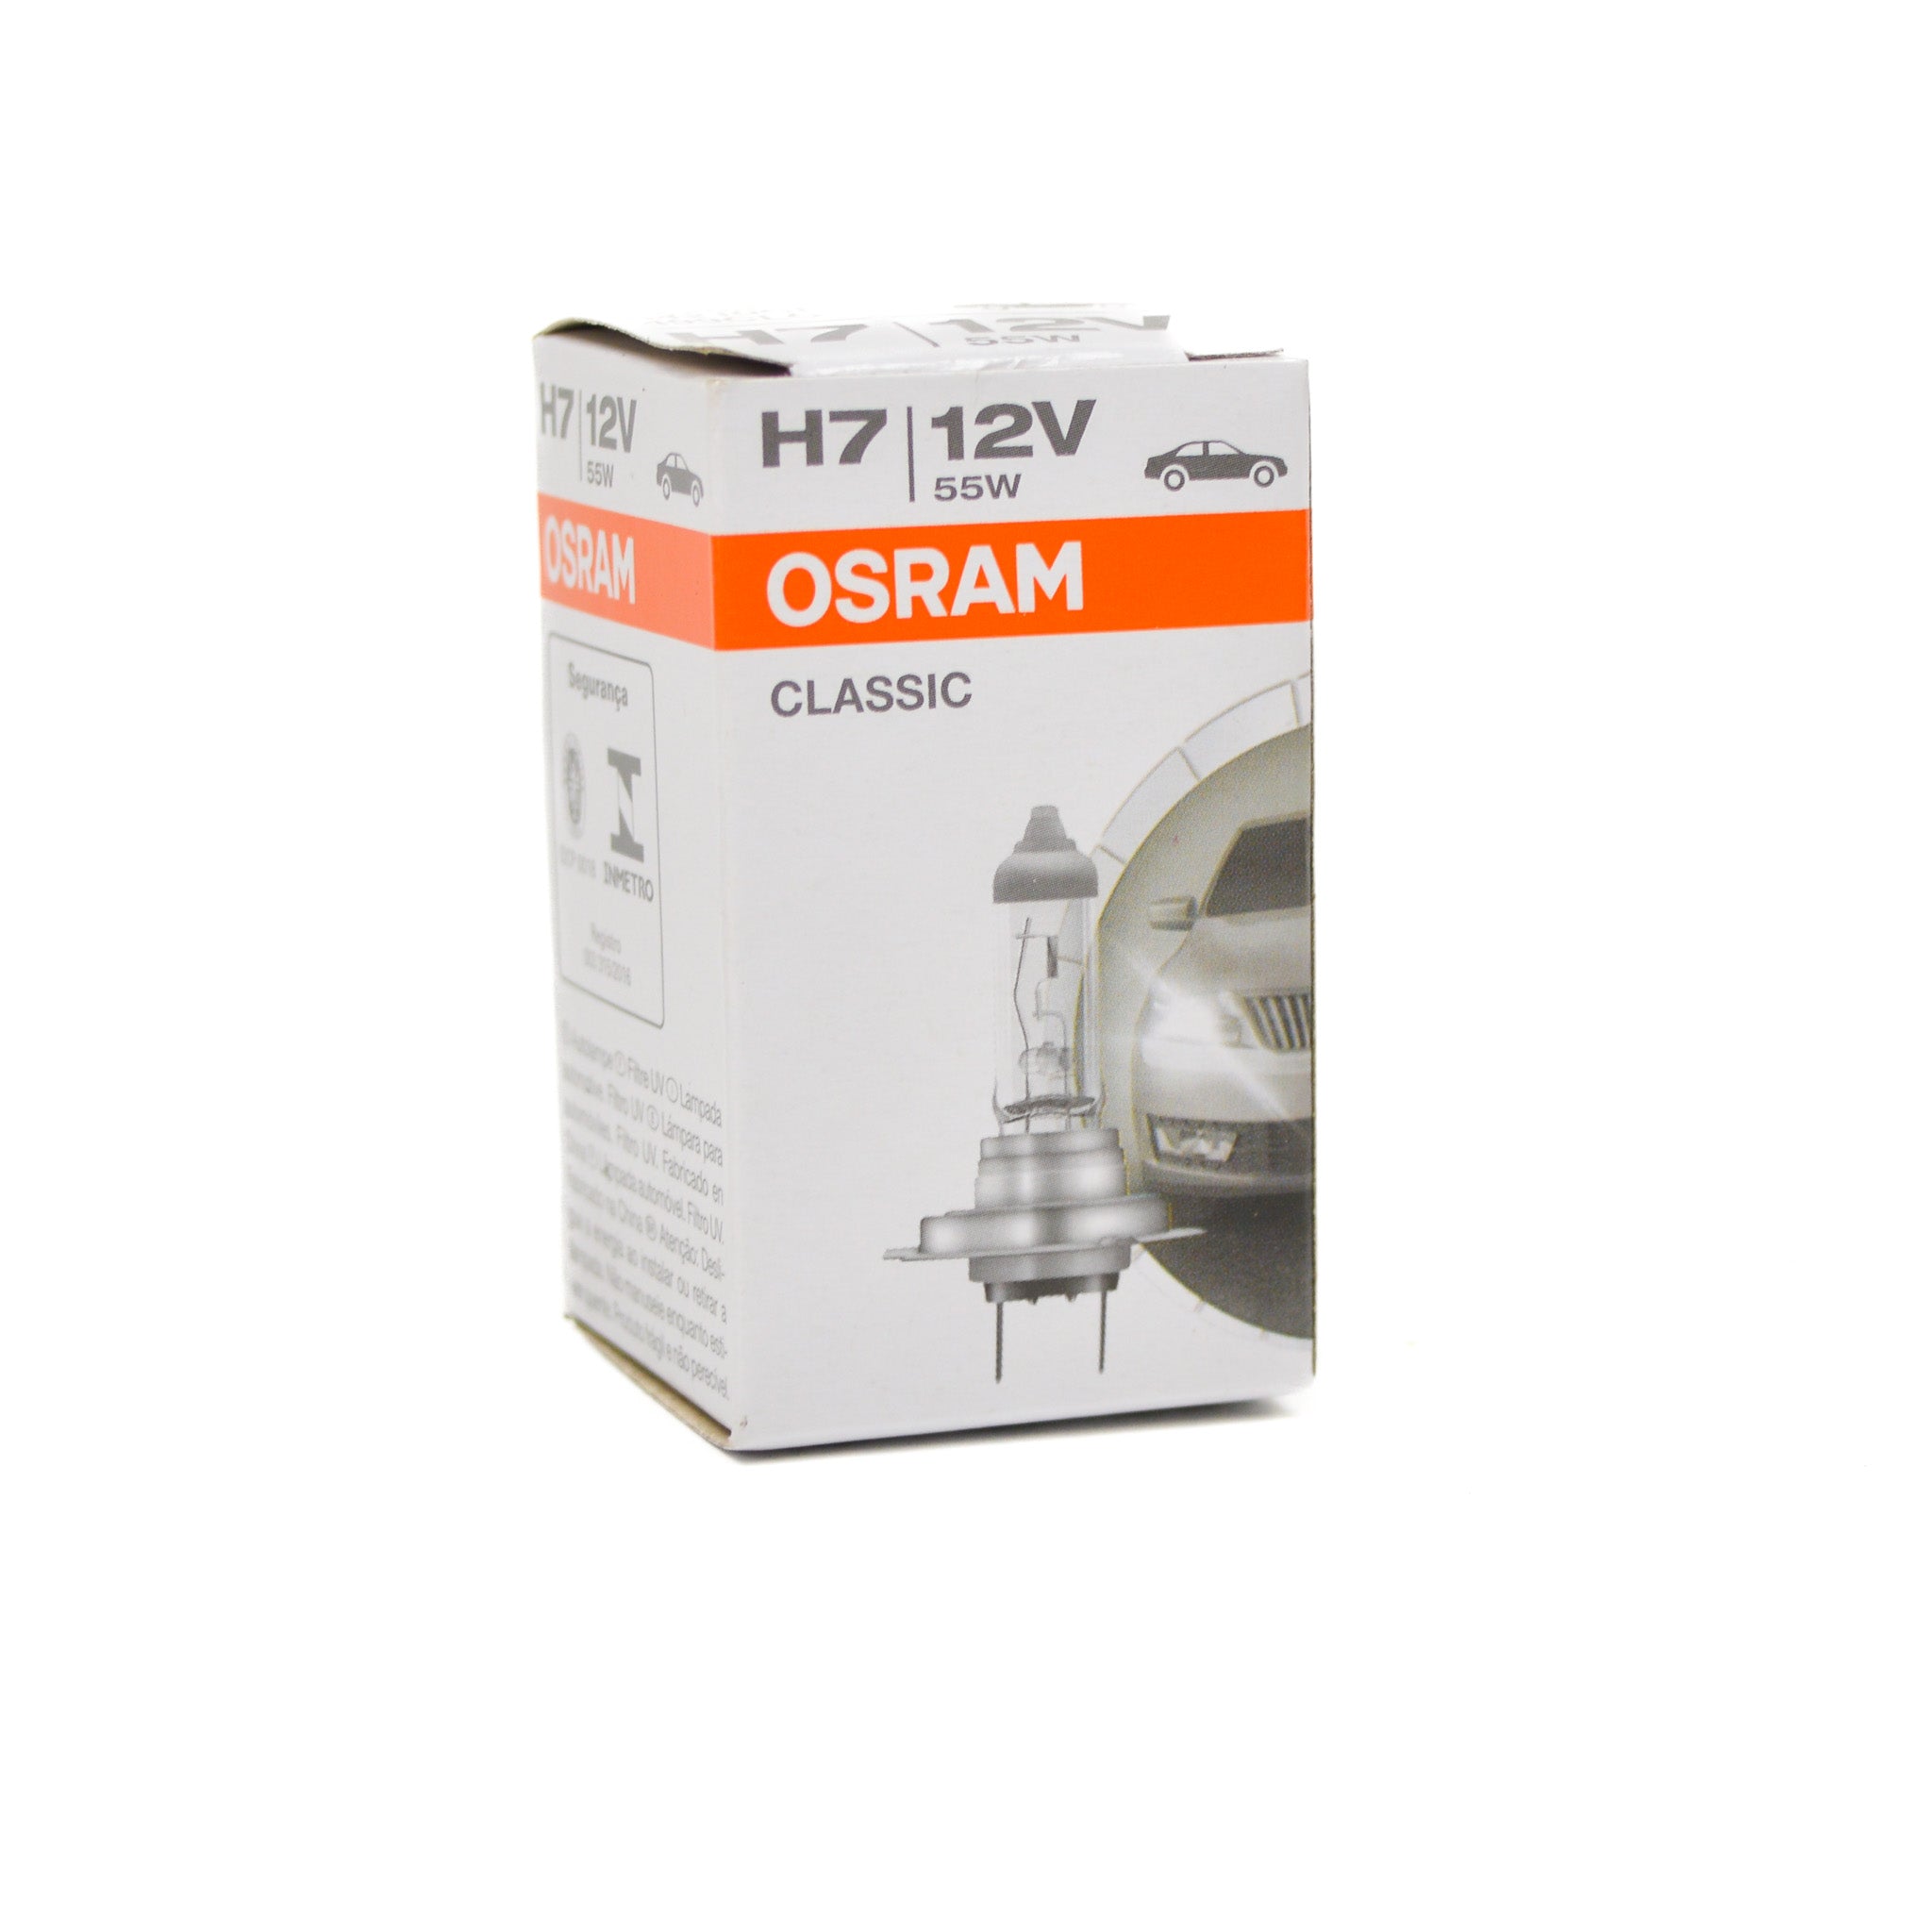 OSRAM halogen bulb H7 Standard 12V, 55W